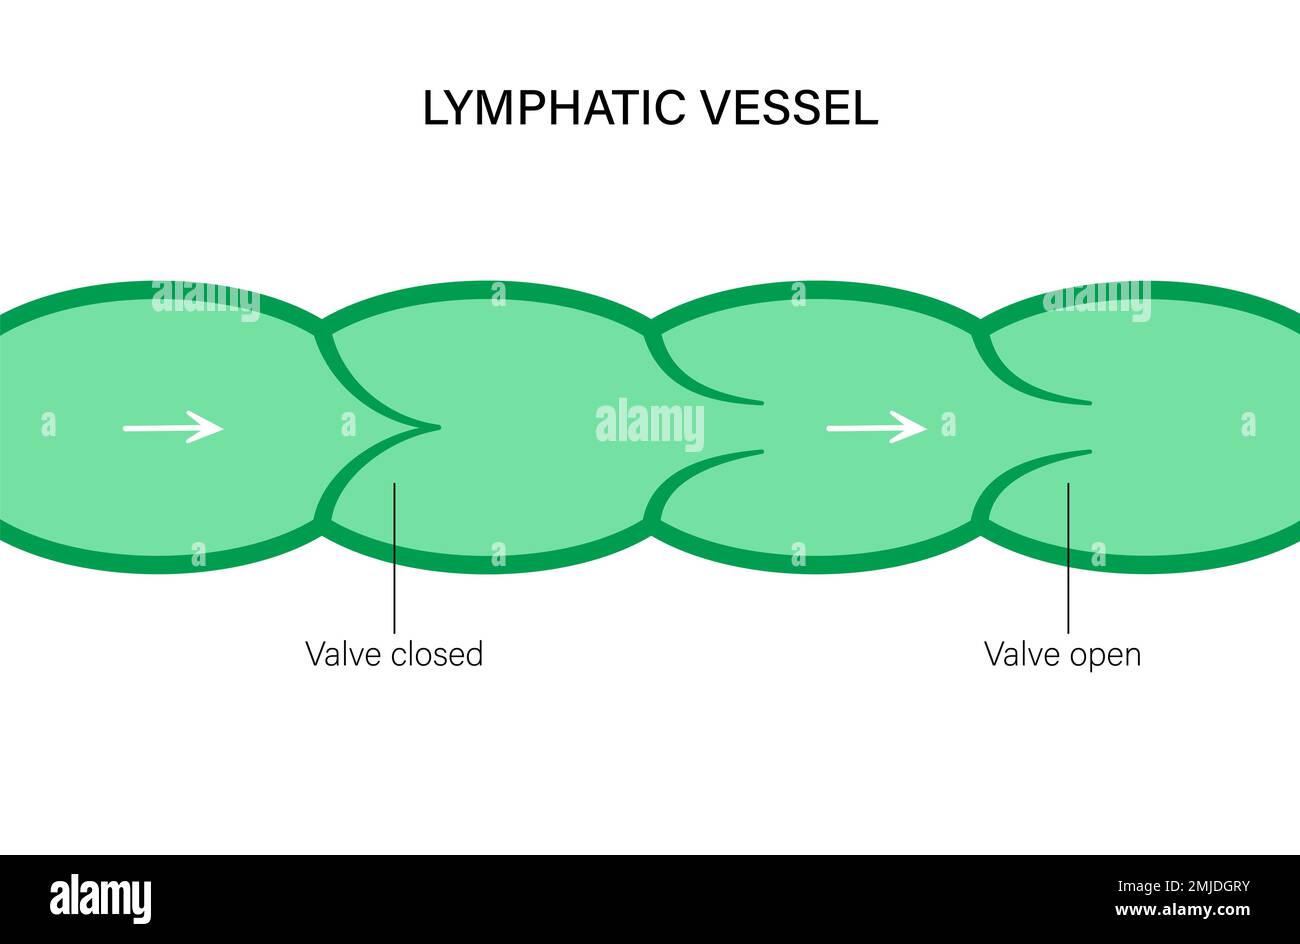 Lymphatic vessel, conceptual illustration Stock Photo